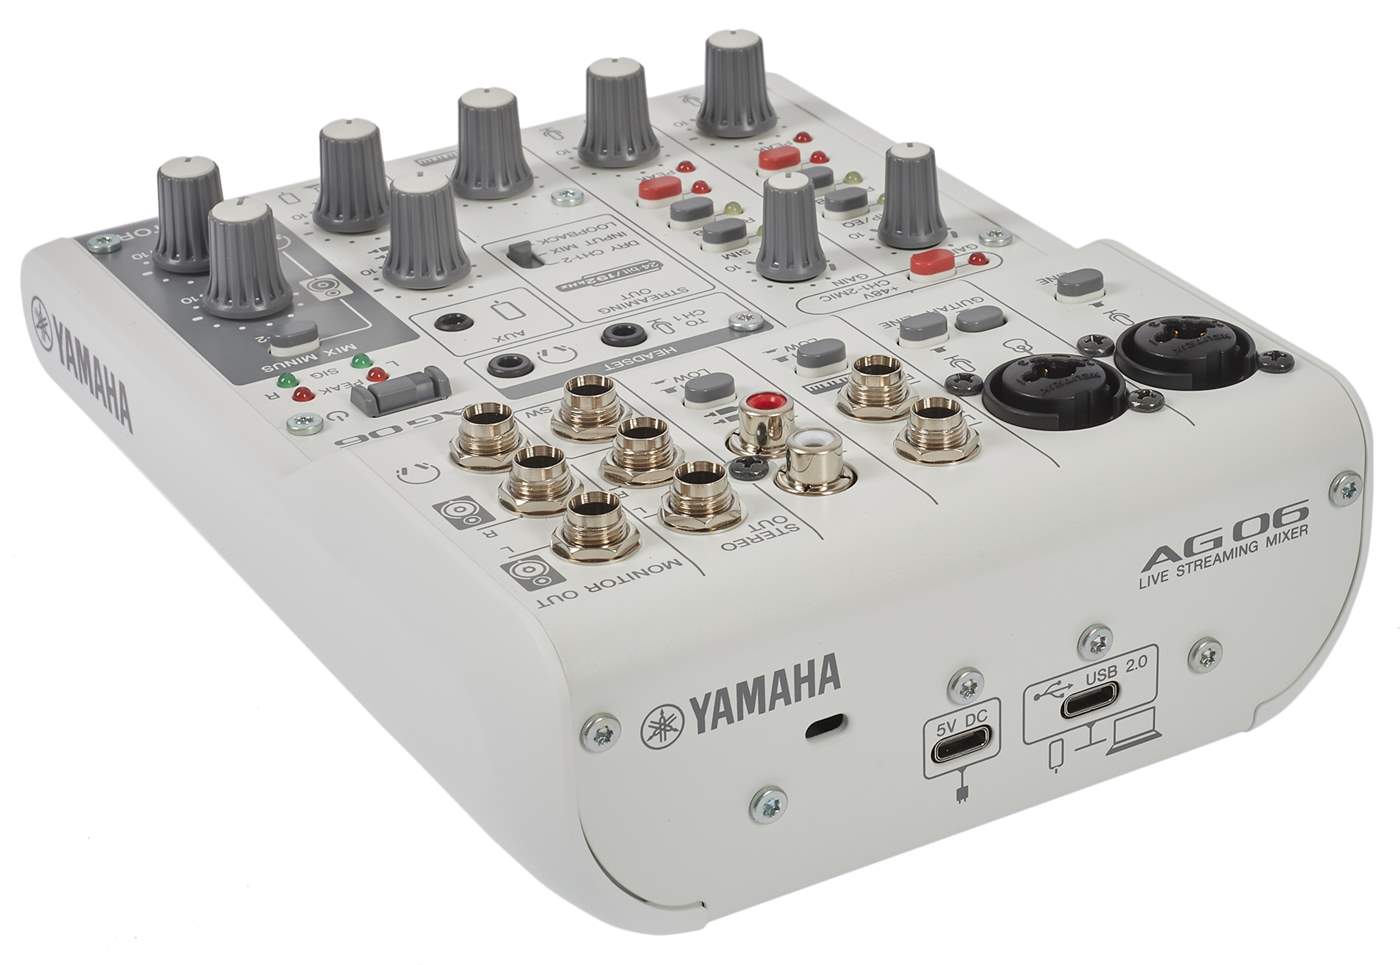 YAMAHA AG06 MK2 White Analogue Mixer | Kytary.ie